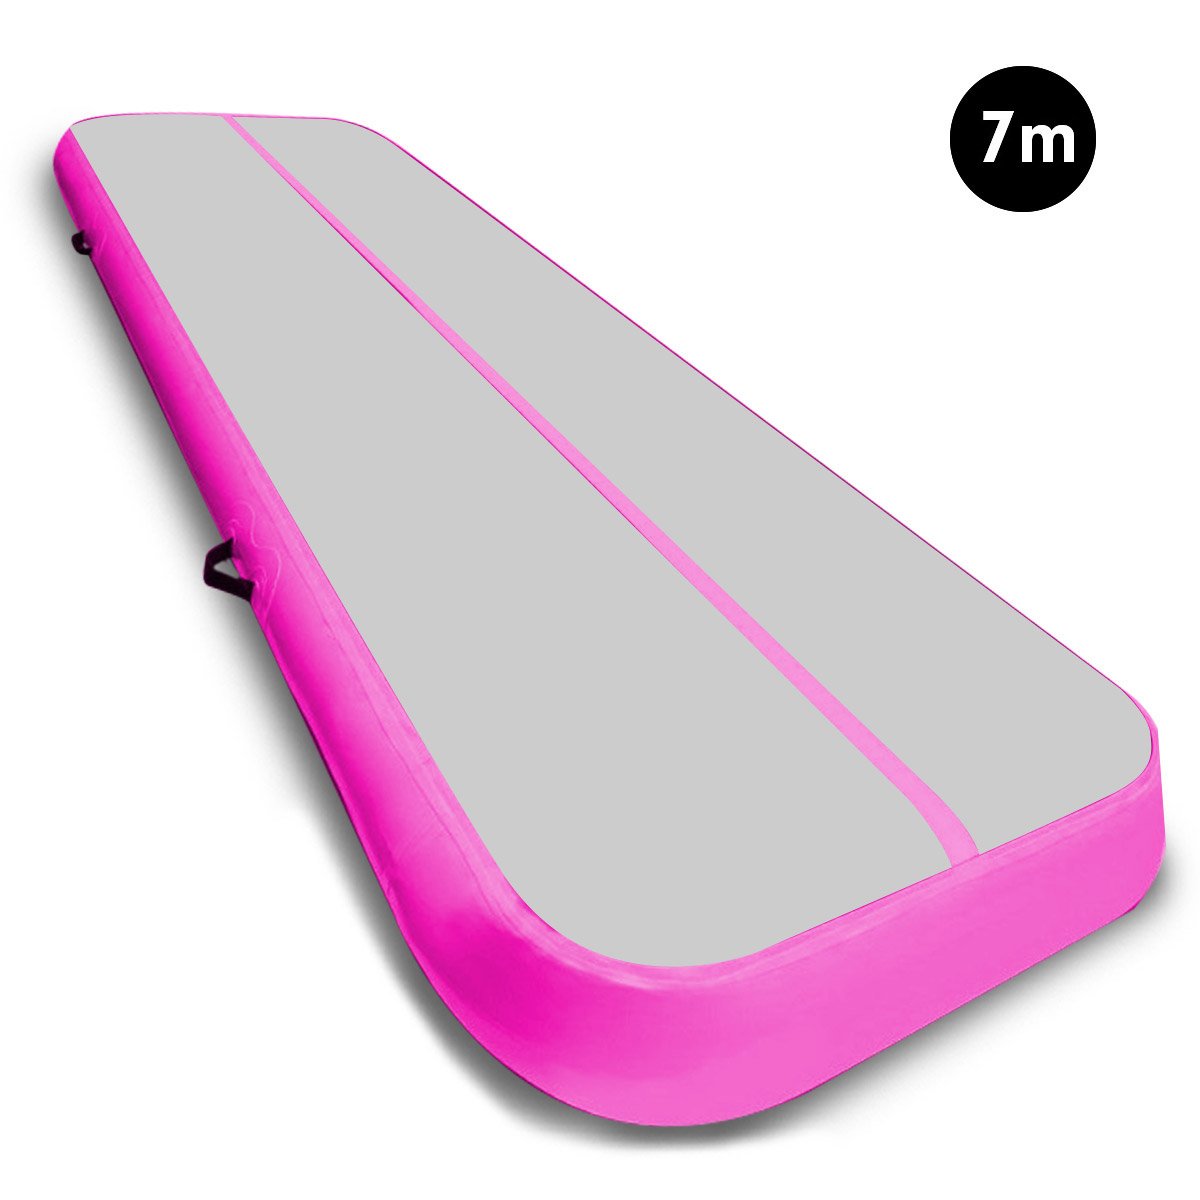 7m x 1m Air Track Inflatable Gymnastics Mat Tumbling - Grey Pink 2